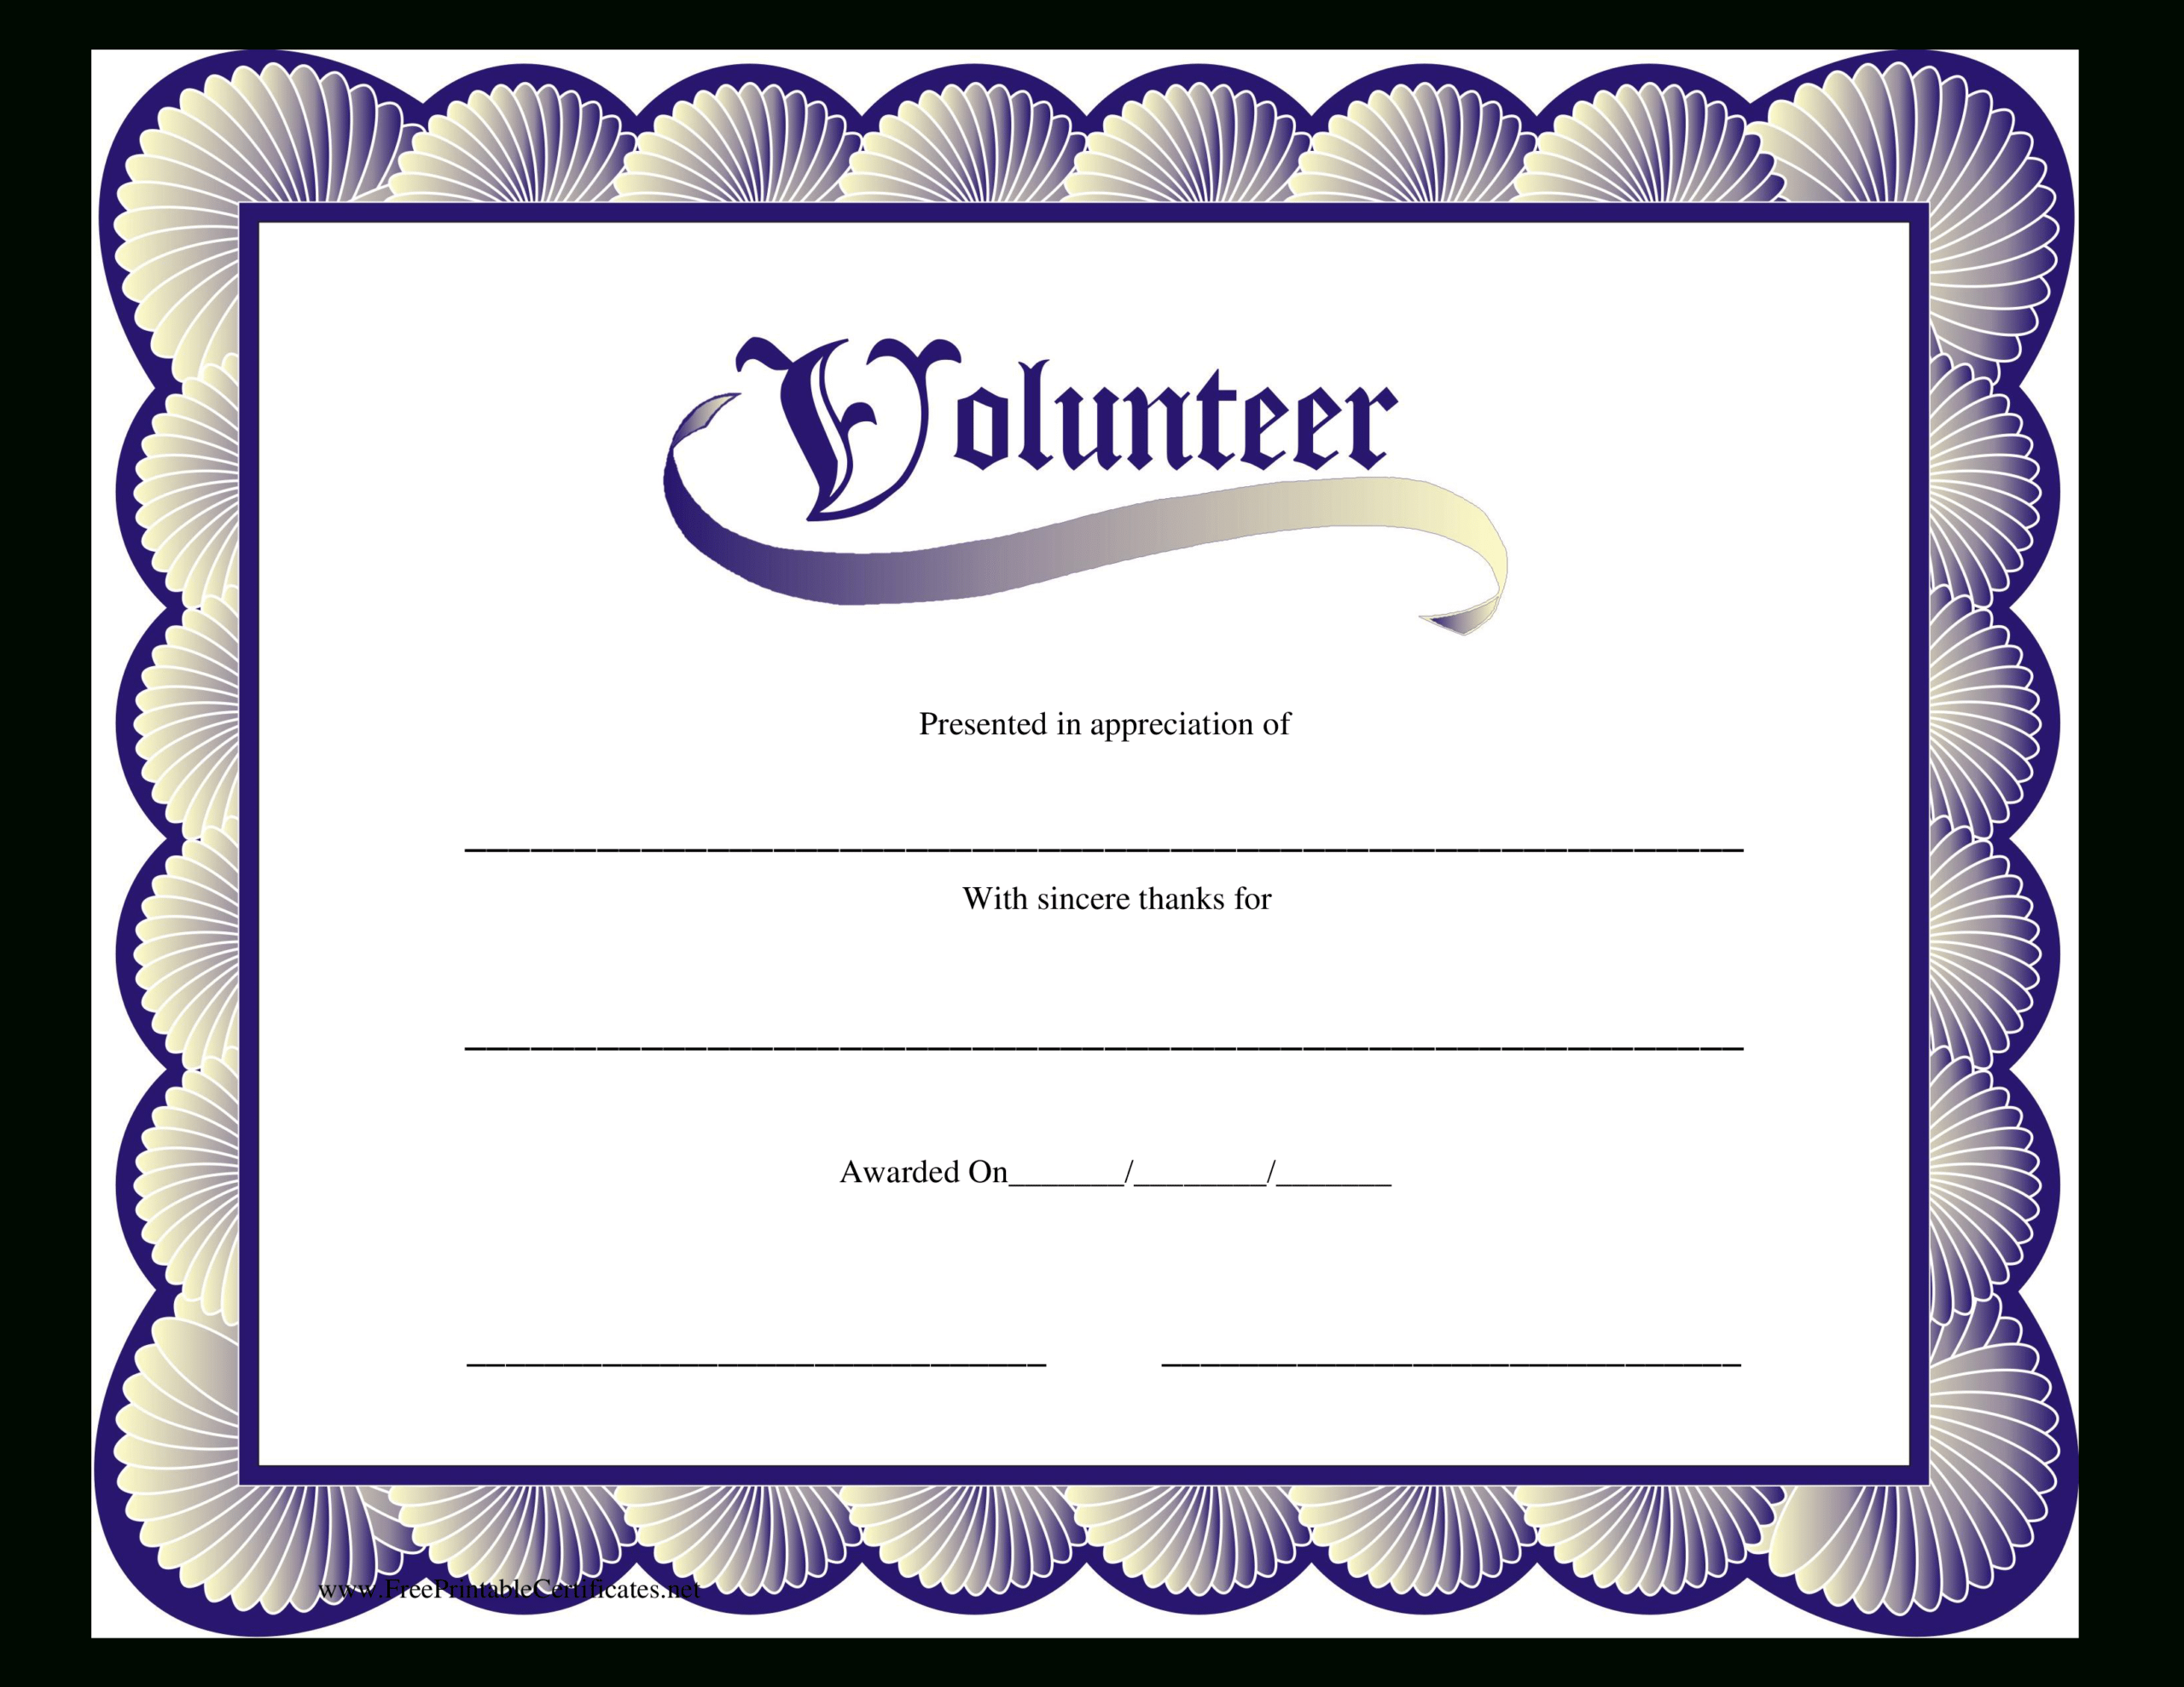 Volunteer Certificate | Templates At Allbusinesstemplates Throughout Volunteer Certificate Templates